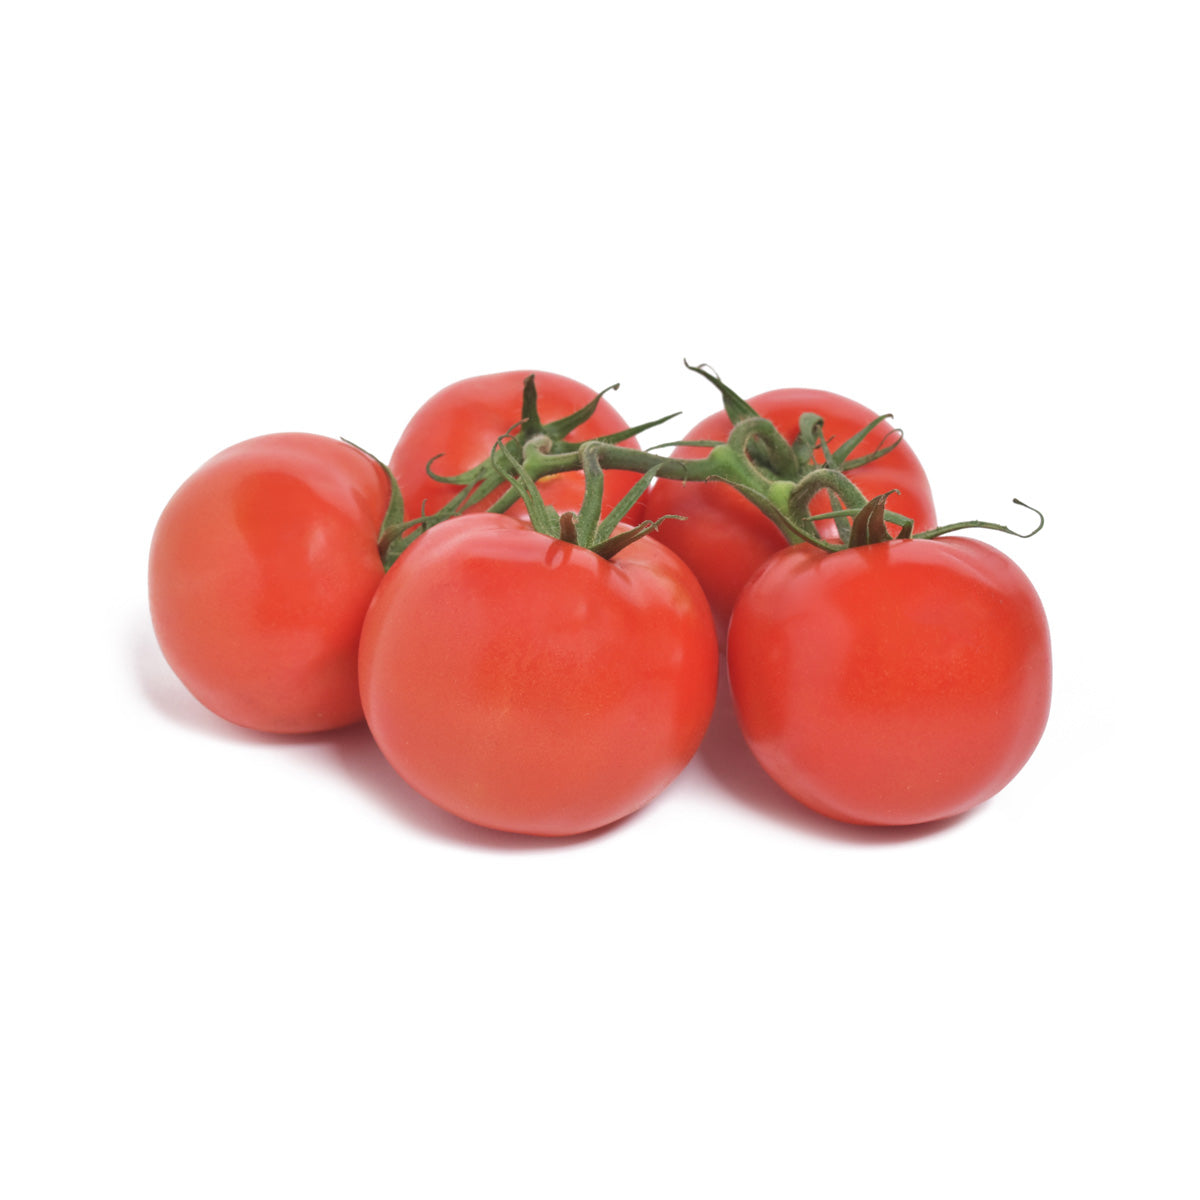 Backyard Farms Medium Tomatoes on the Vine 11 lb